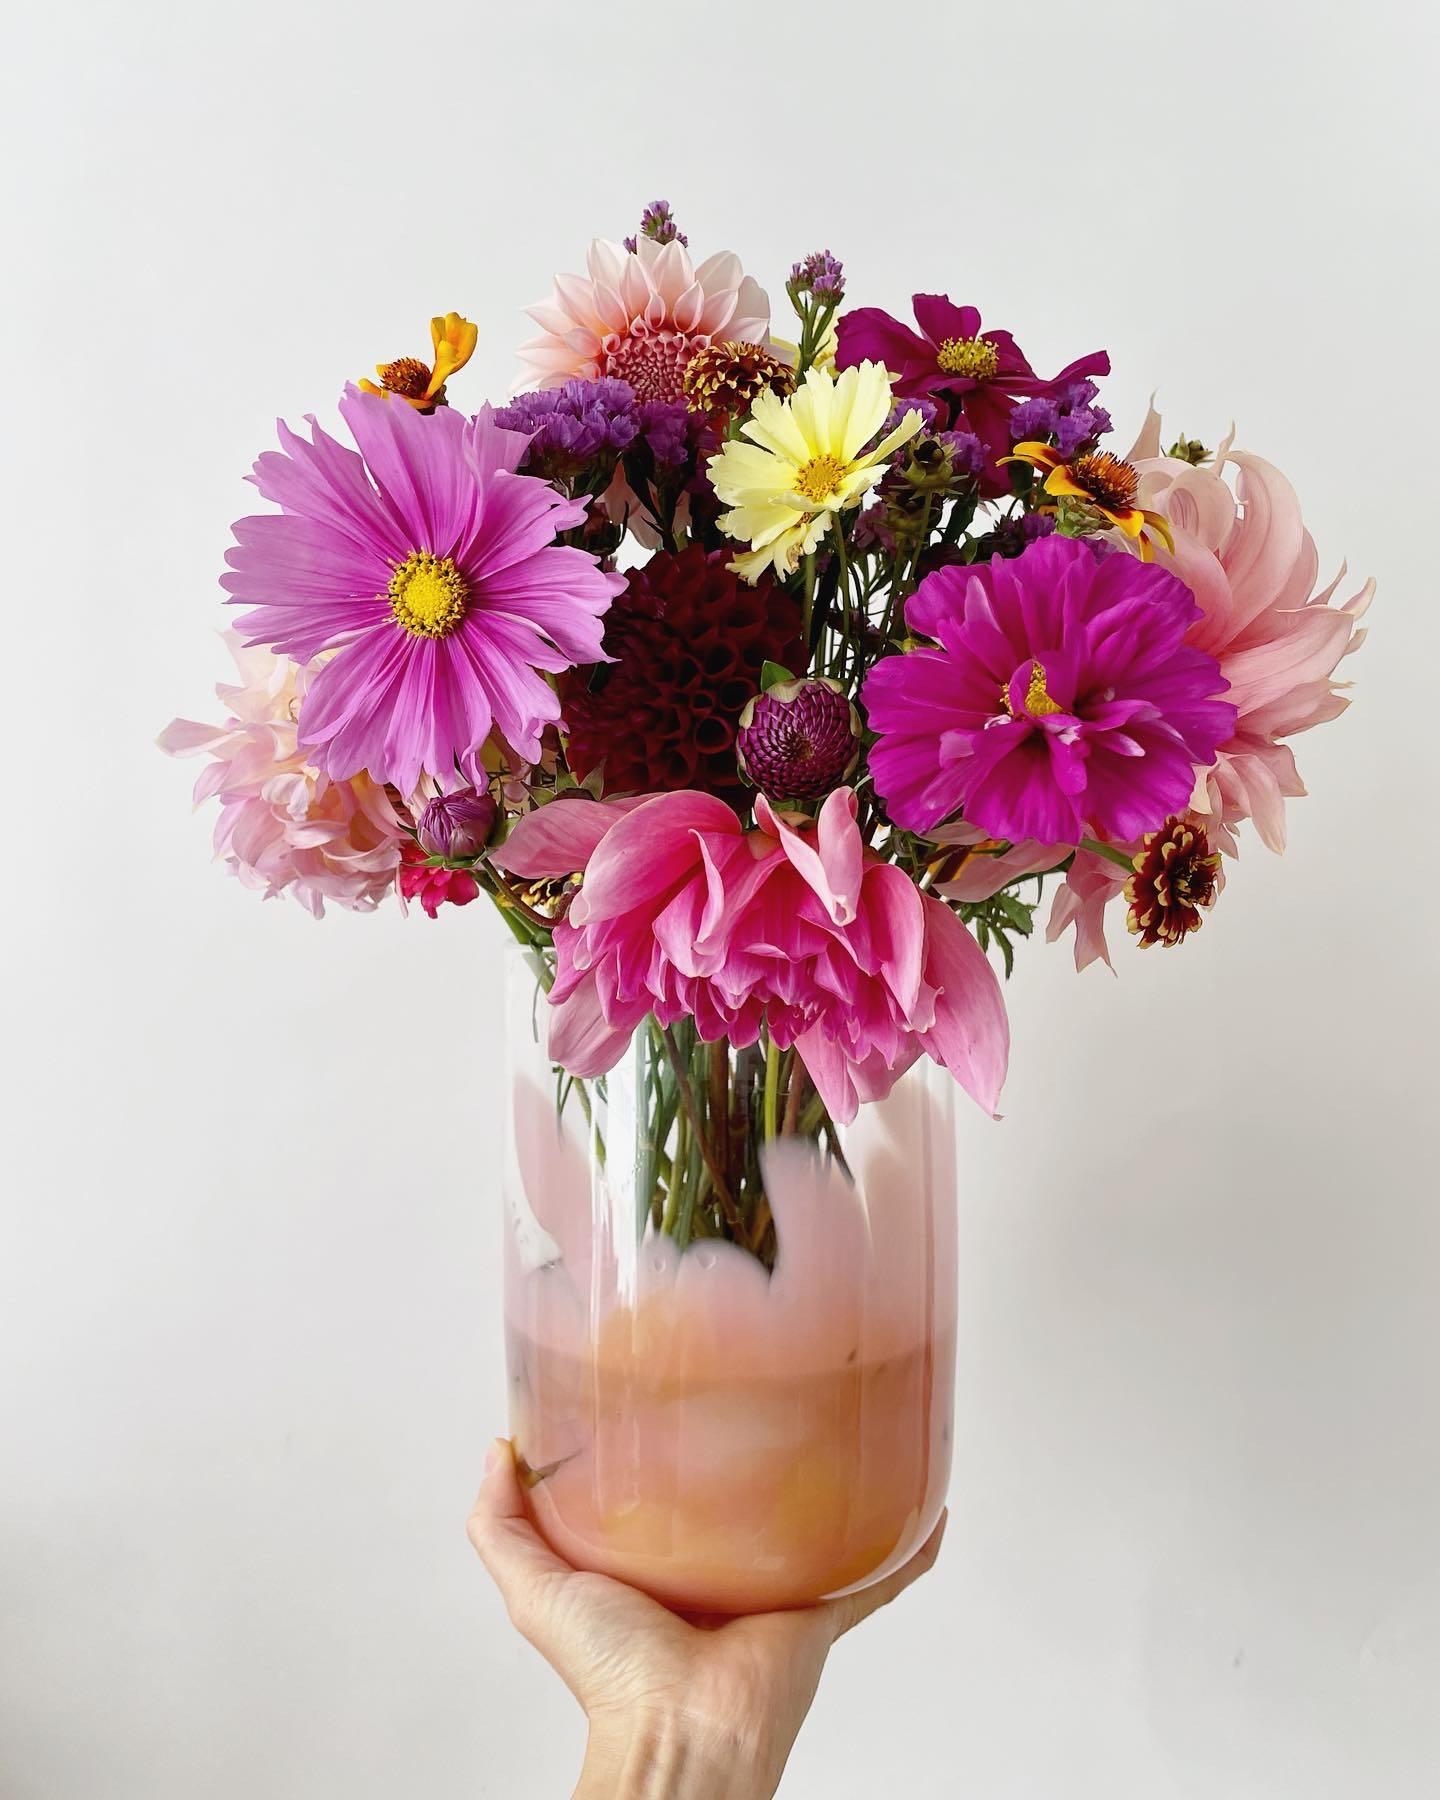 #fridayflowers #flowergirl #happyfriday #summercolors #couchstyle @Studiobloom_design